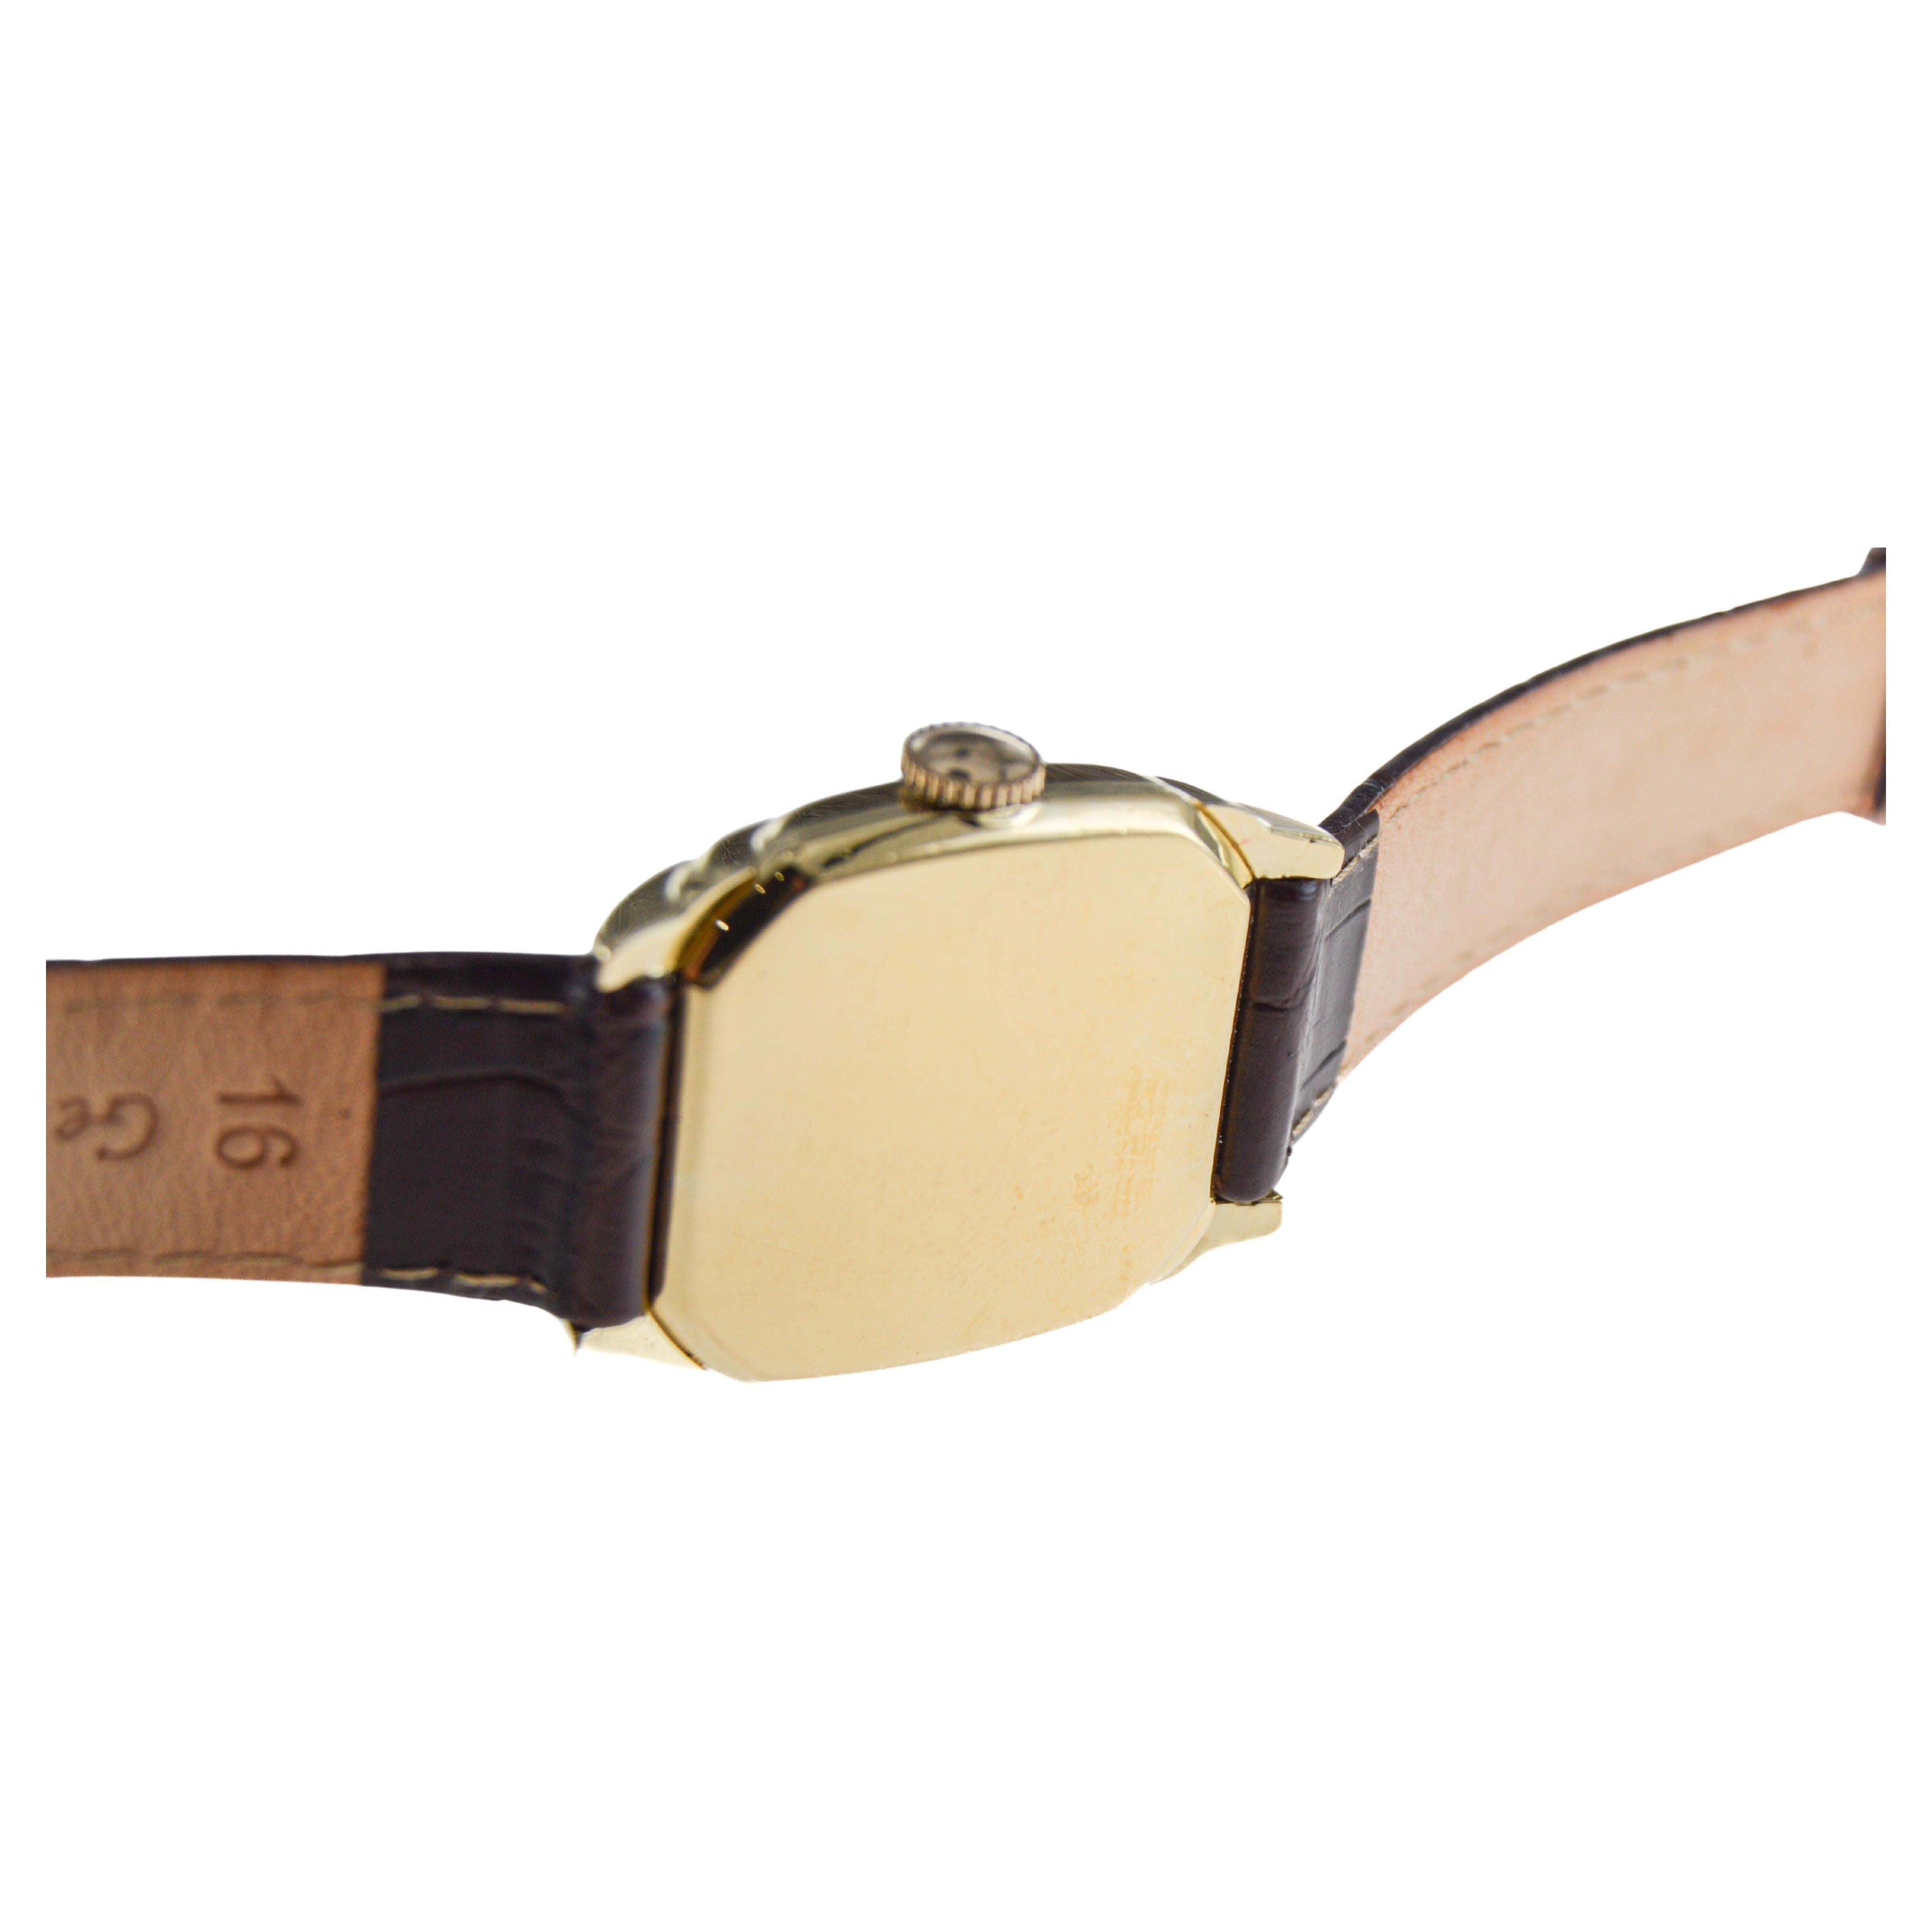 Elgin Yellow Gold Filled Tonneau Shape Watch Circa 1931 with Original Dial 7